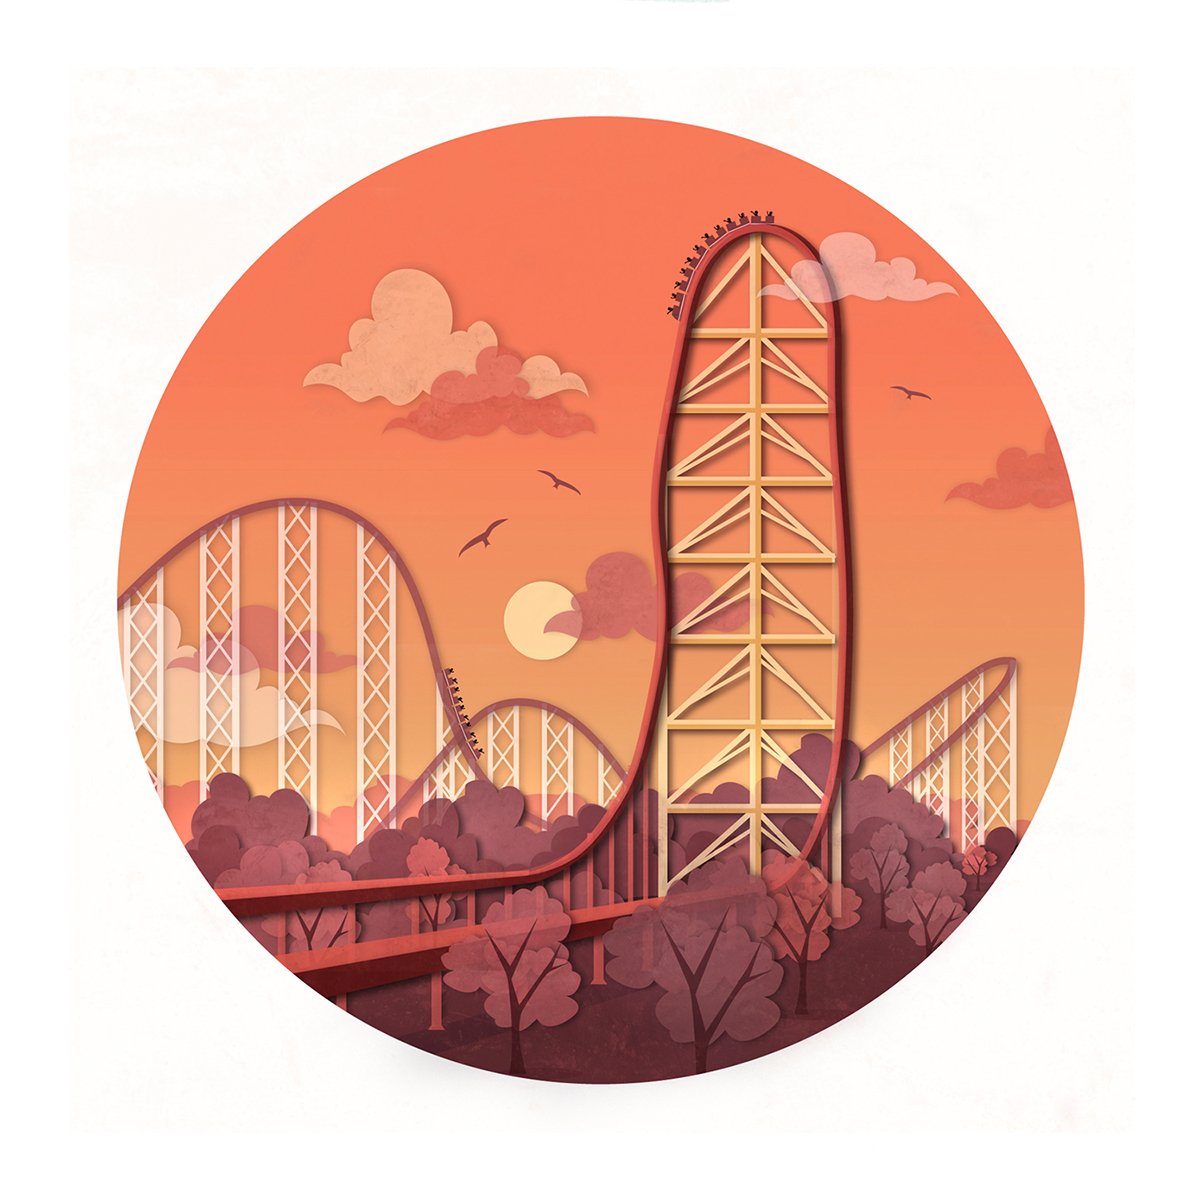 Roller Coasters millenium force Top Thrill Dragster raptor cedar point cedar point illustration vector art